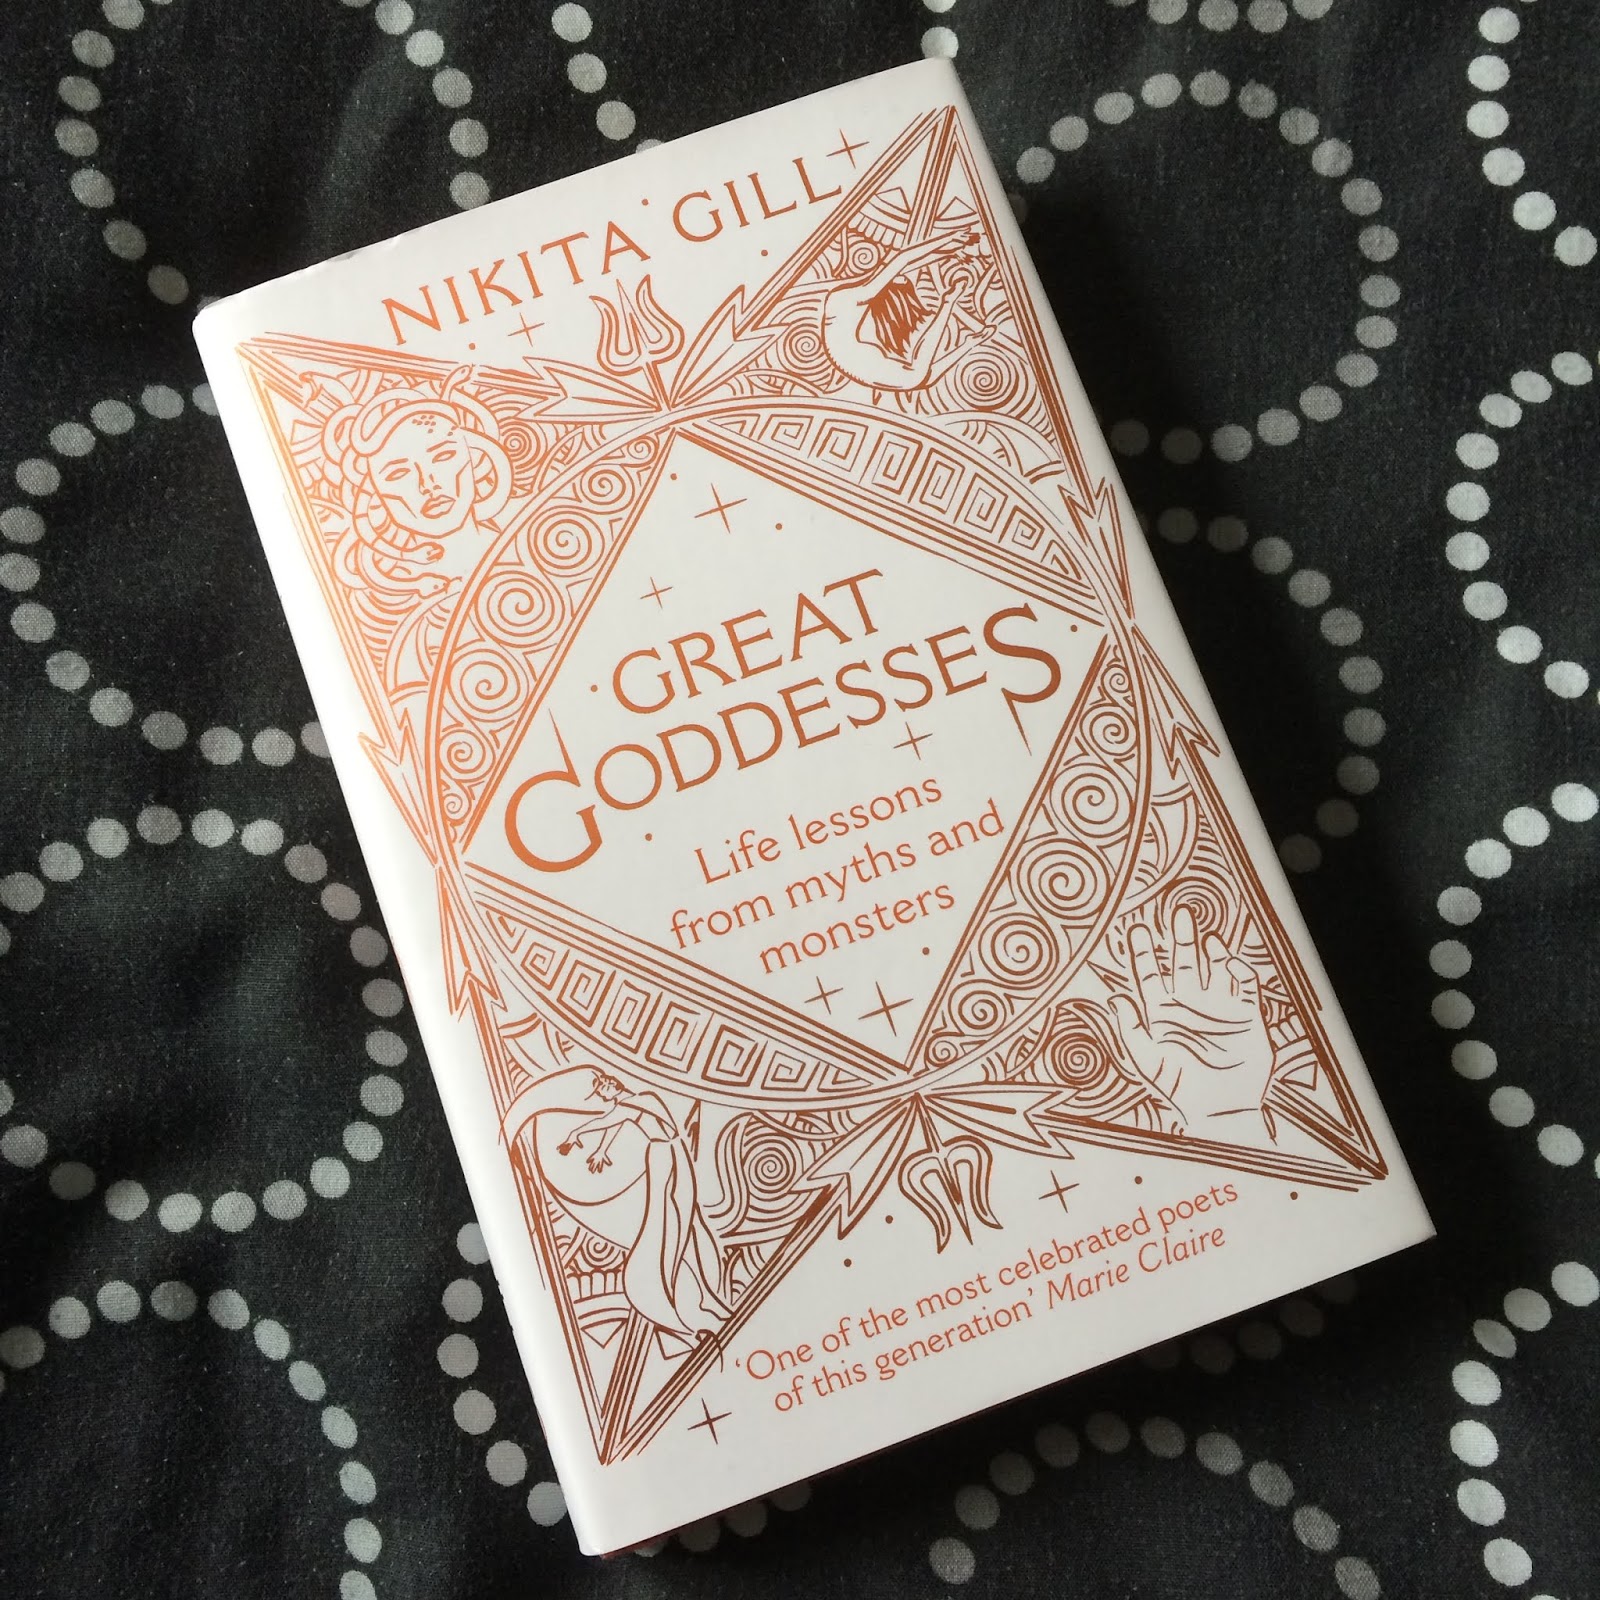 Great Goddesses by Nikita Gill